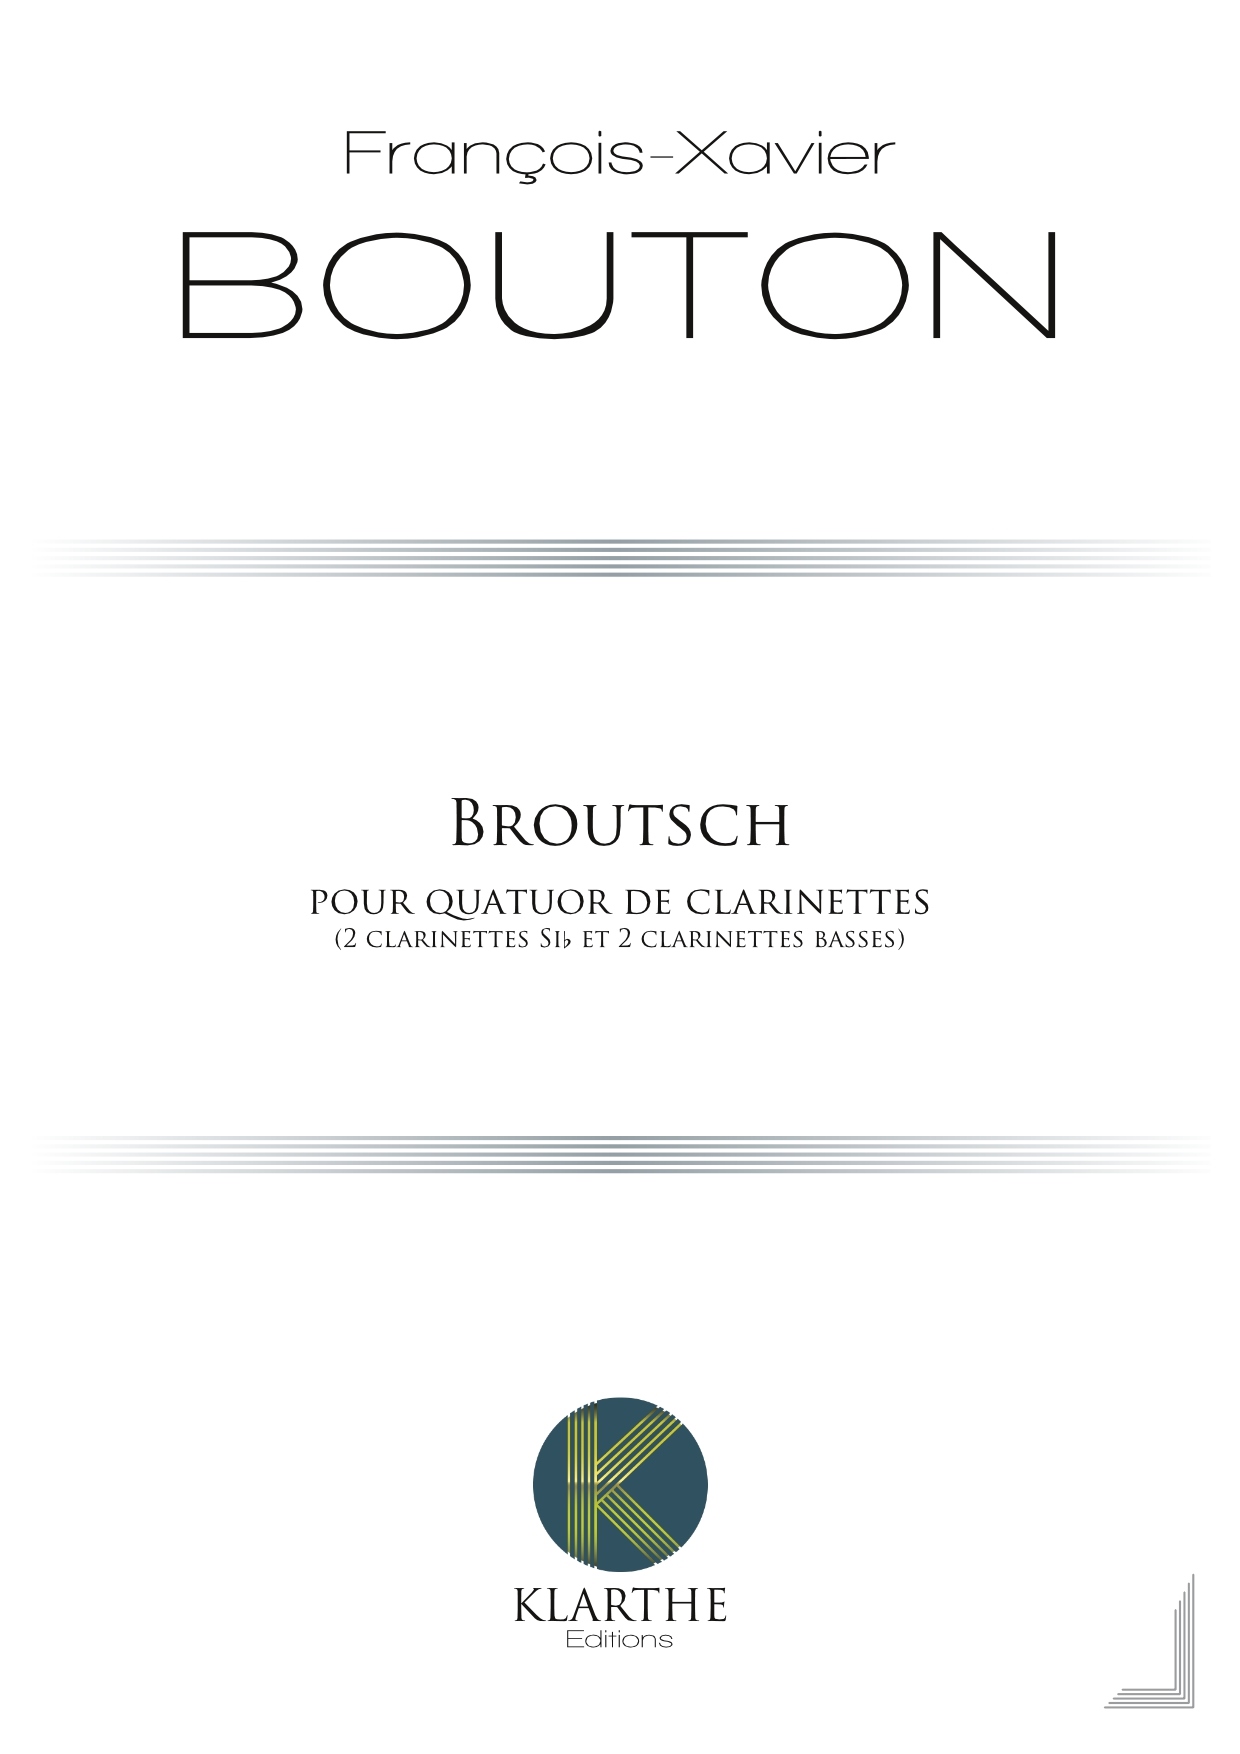 Broutsch (BOUTON FRANCOIS-XAVIER)